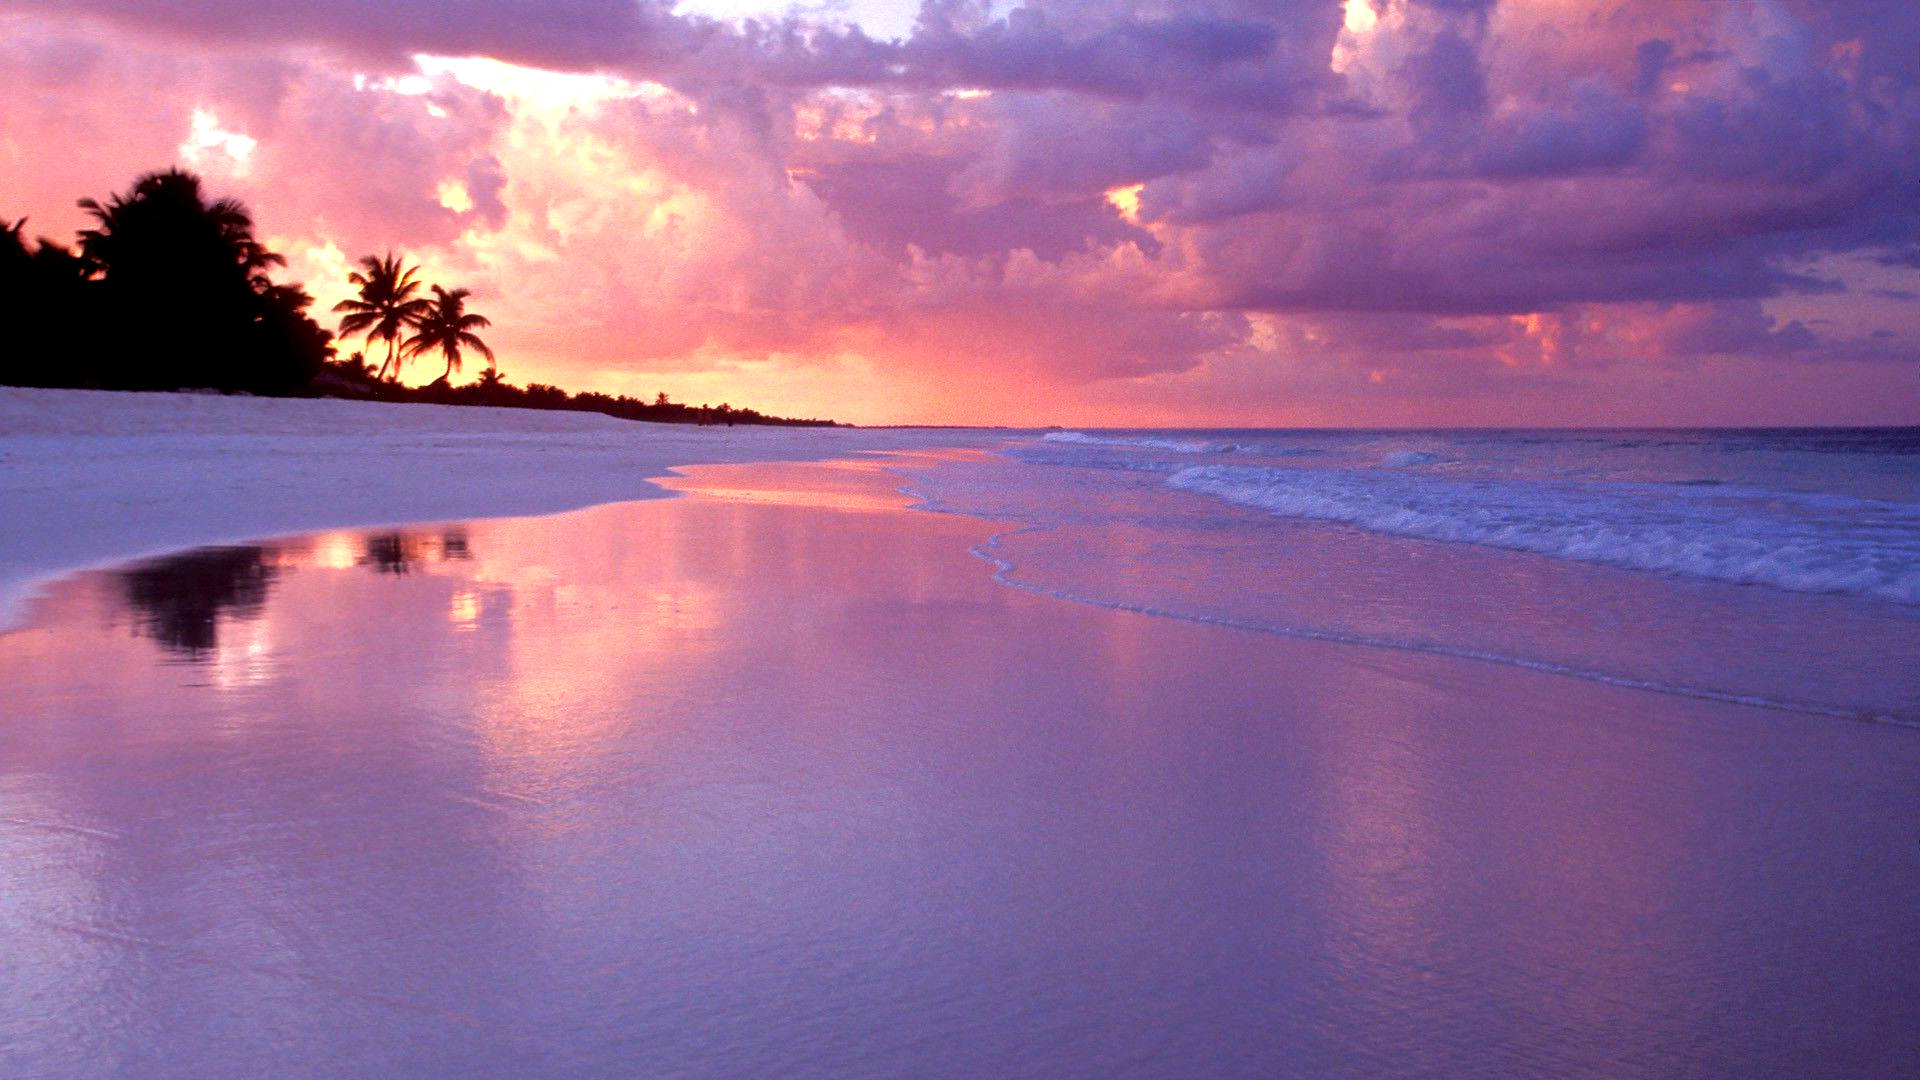 Mesmerizing Sunset At The Beach Wallpaper